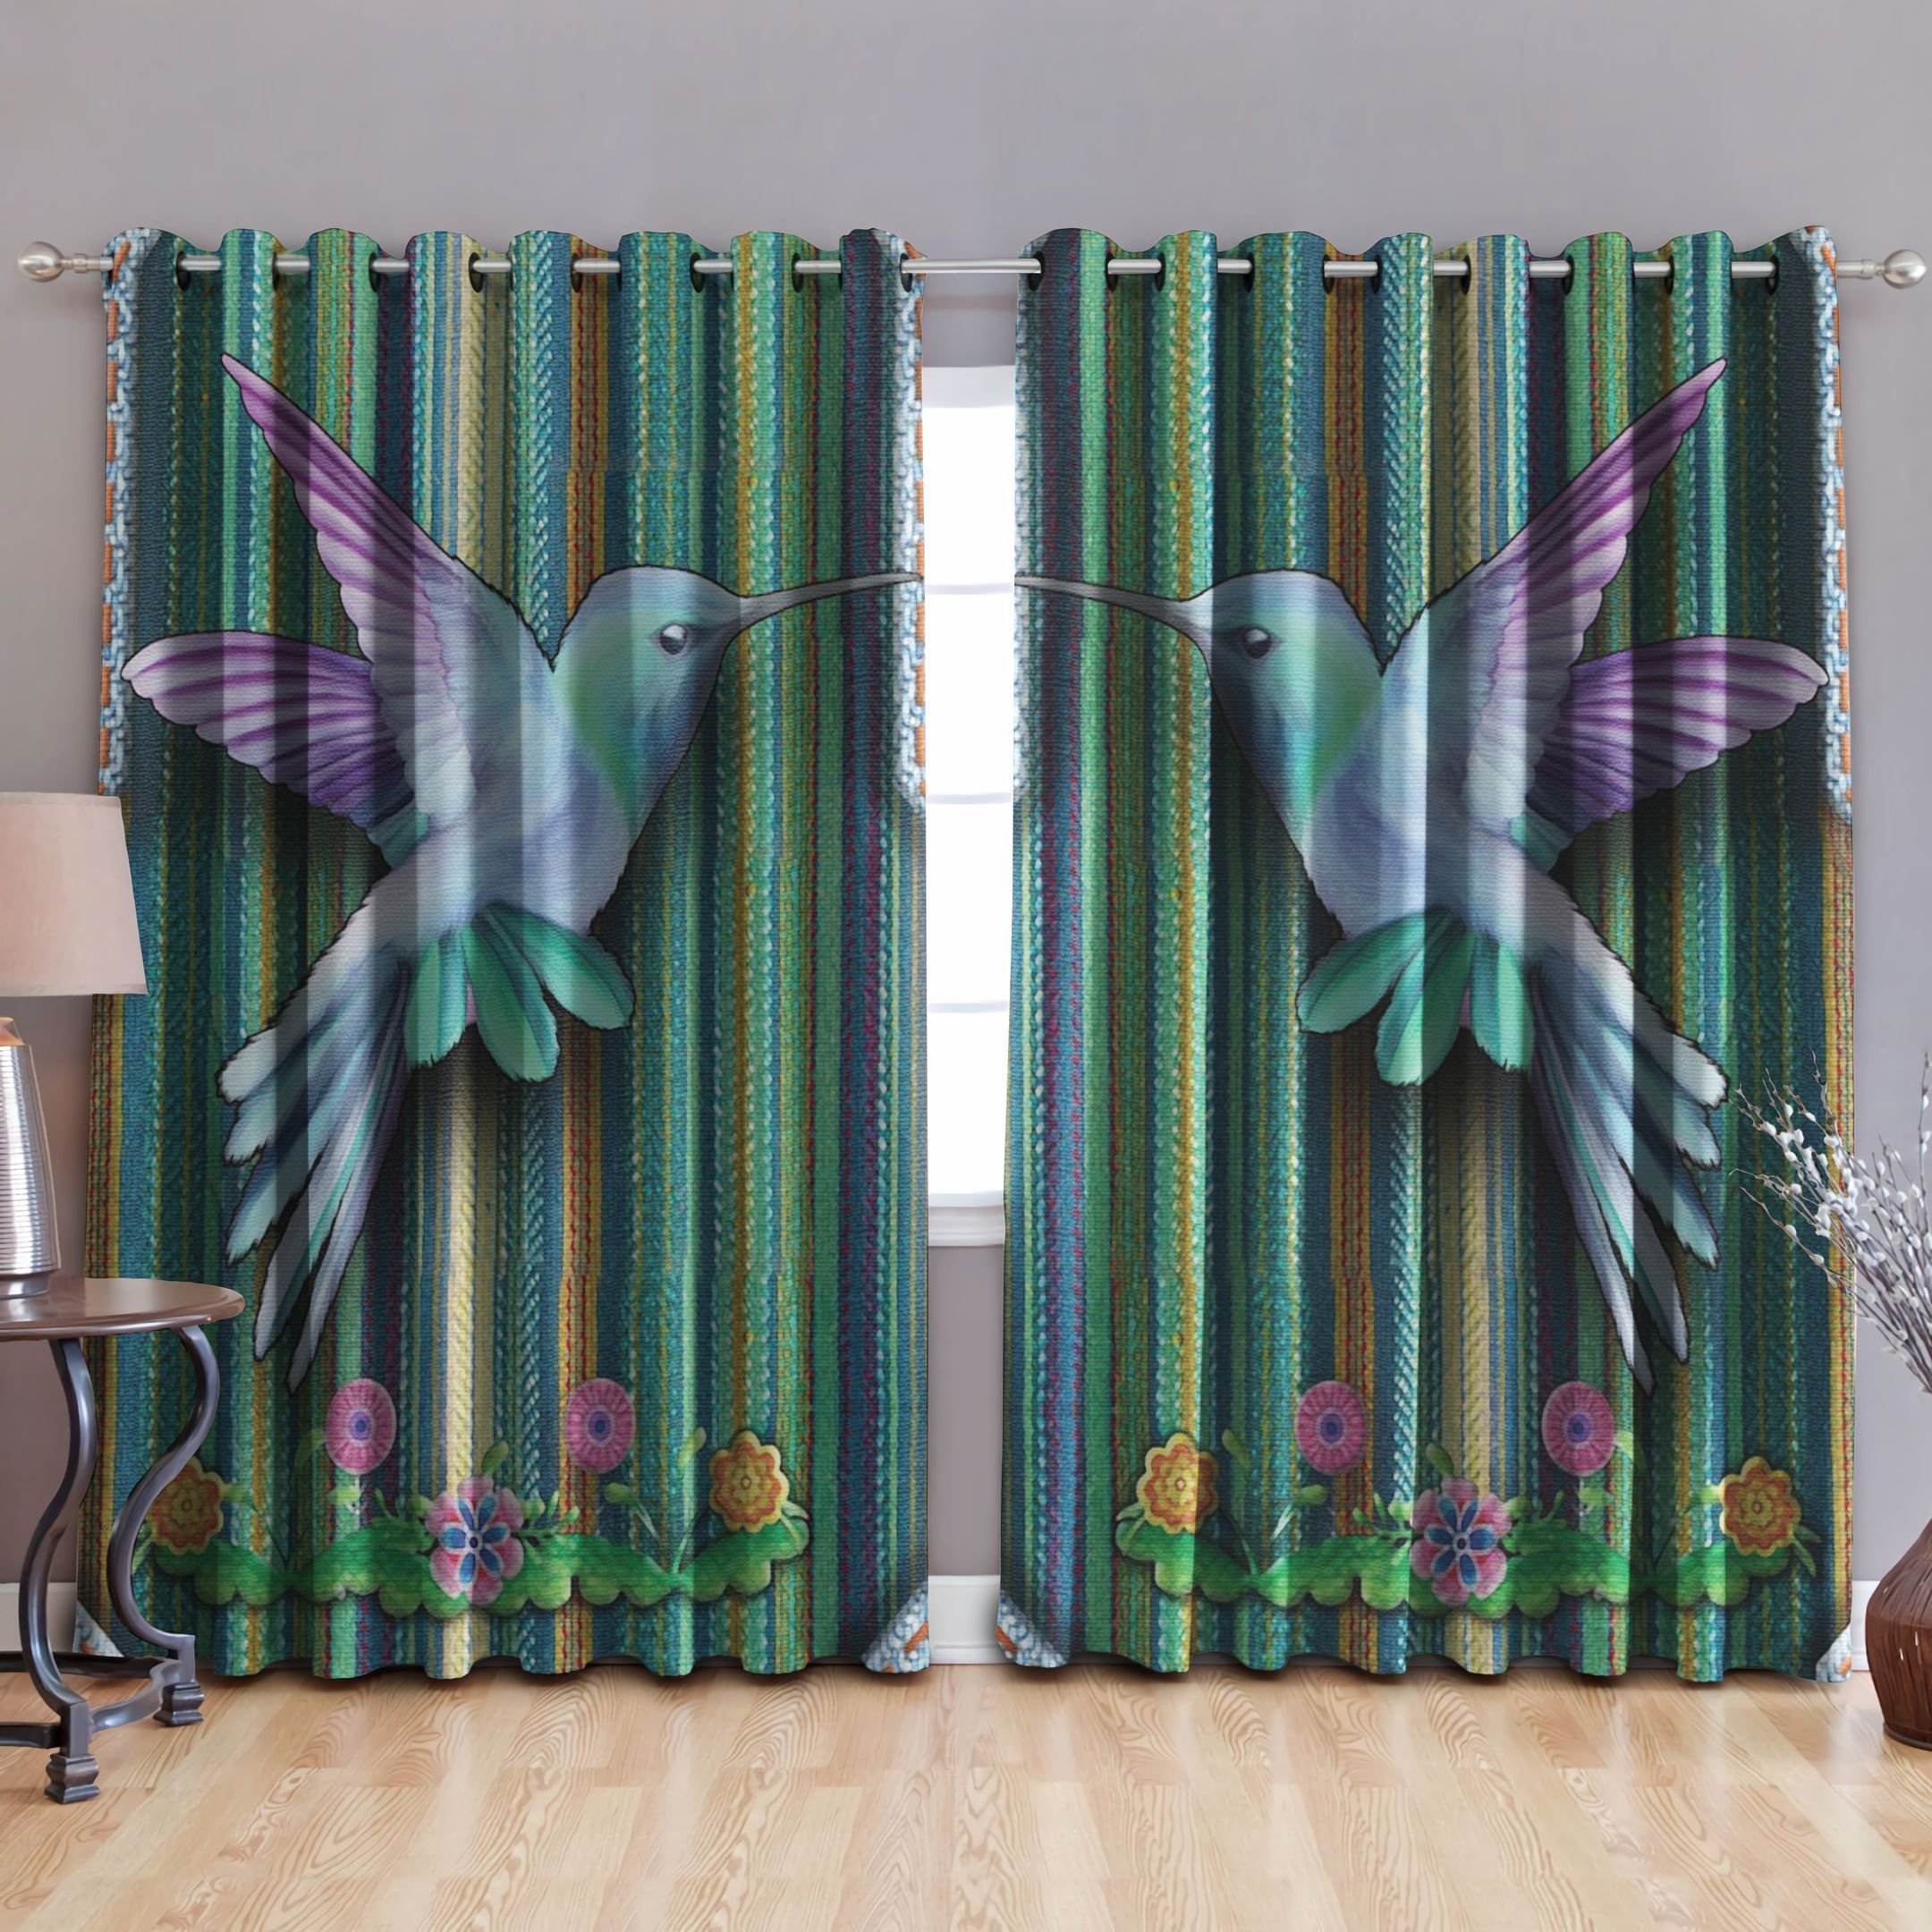 Hummingbird With Elegant Theme Printed Window Curtains Home Decor